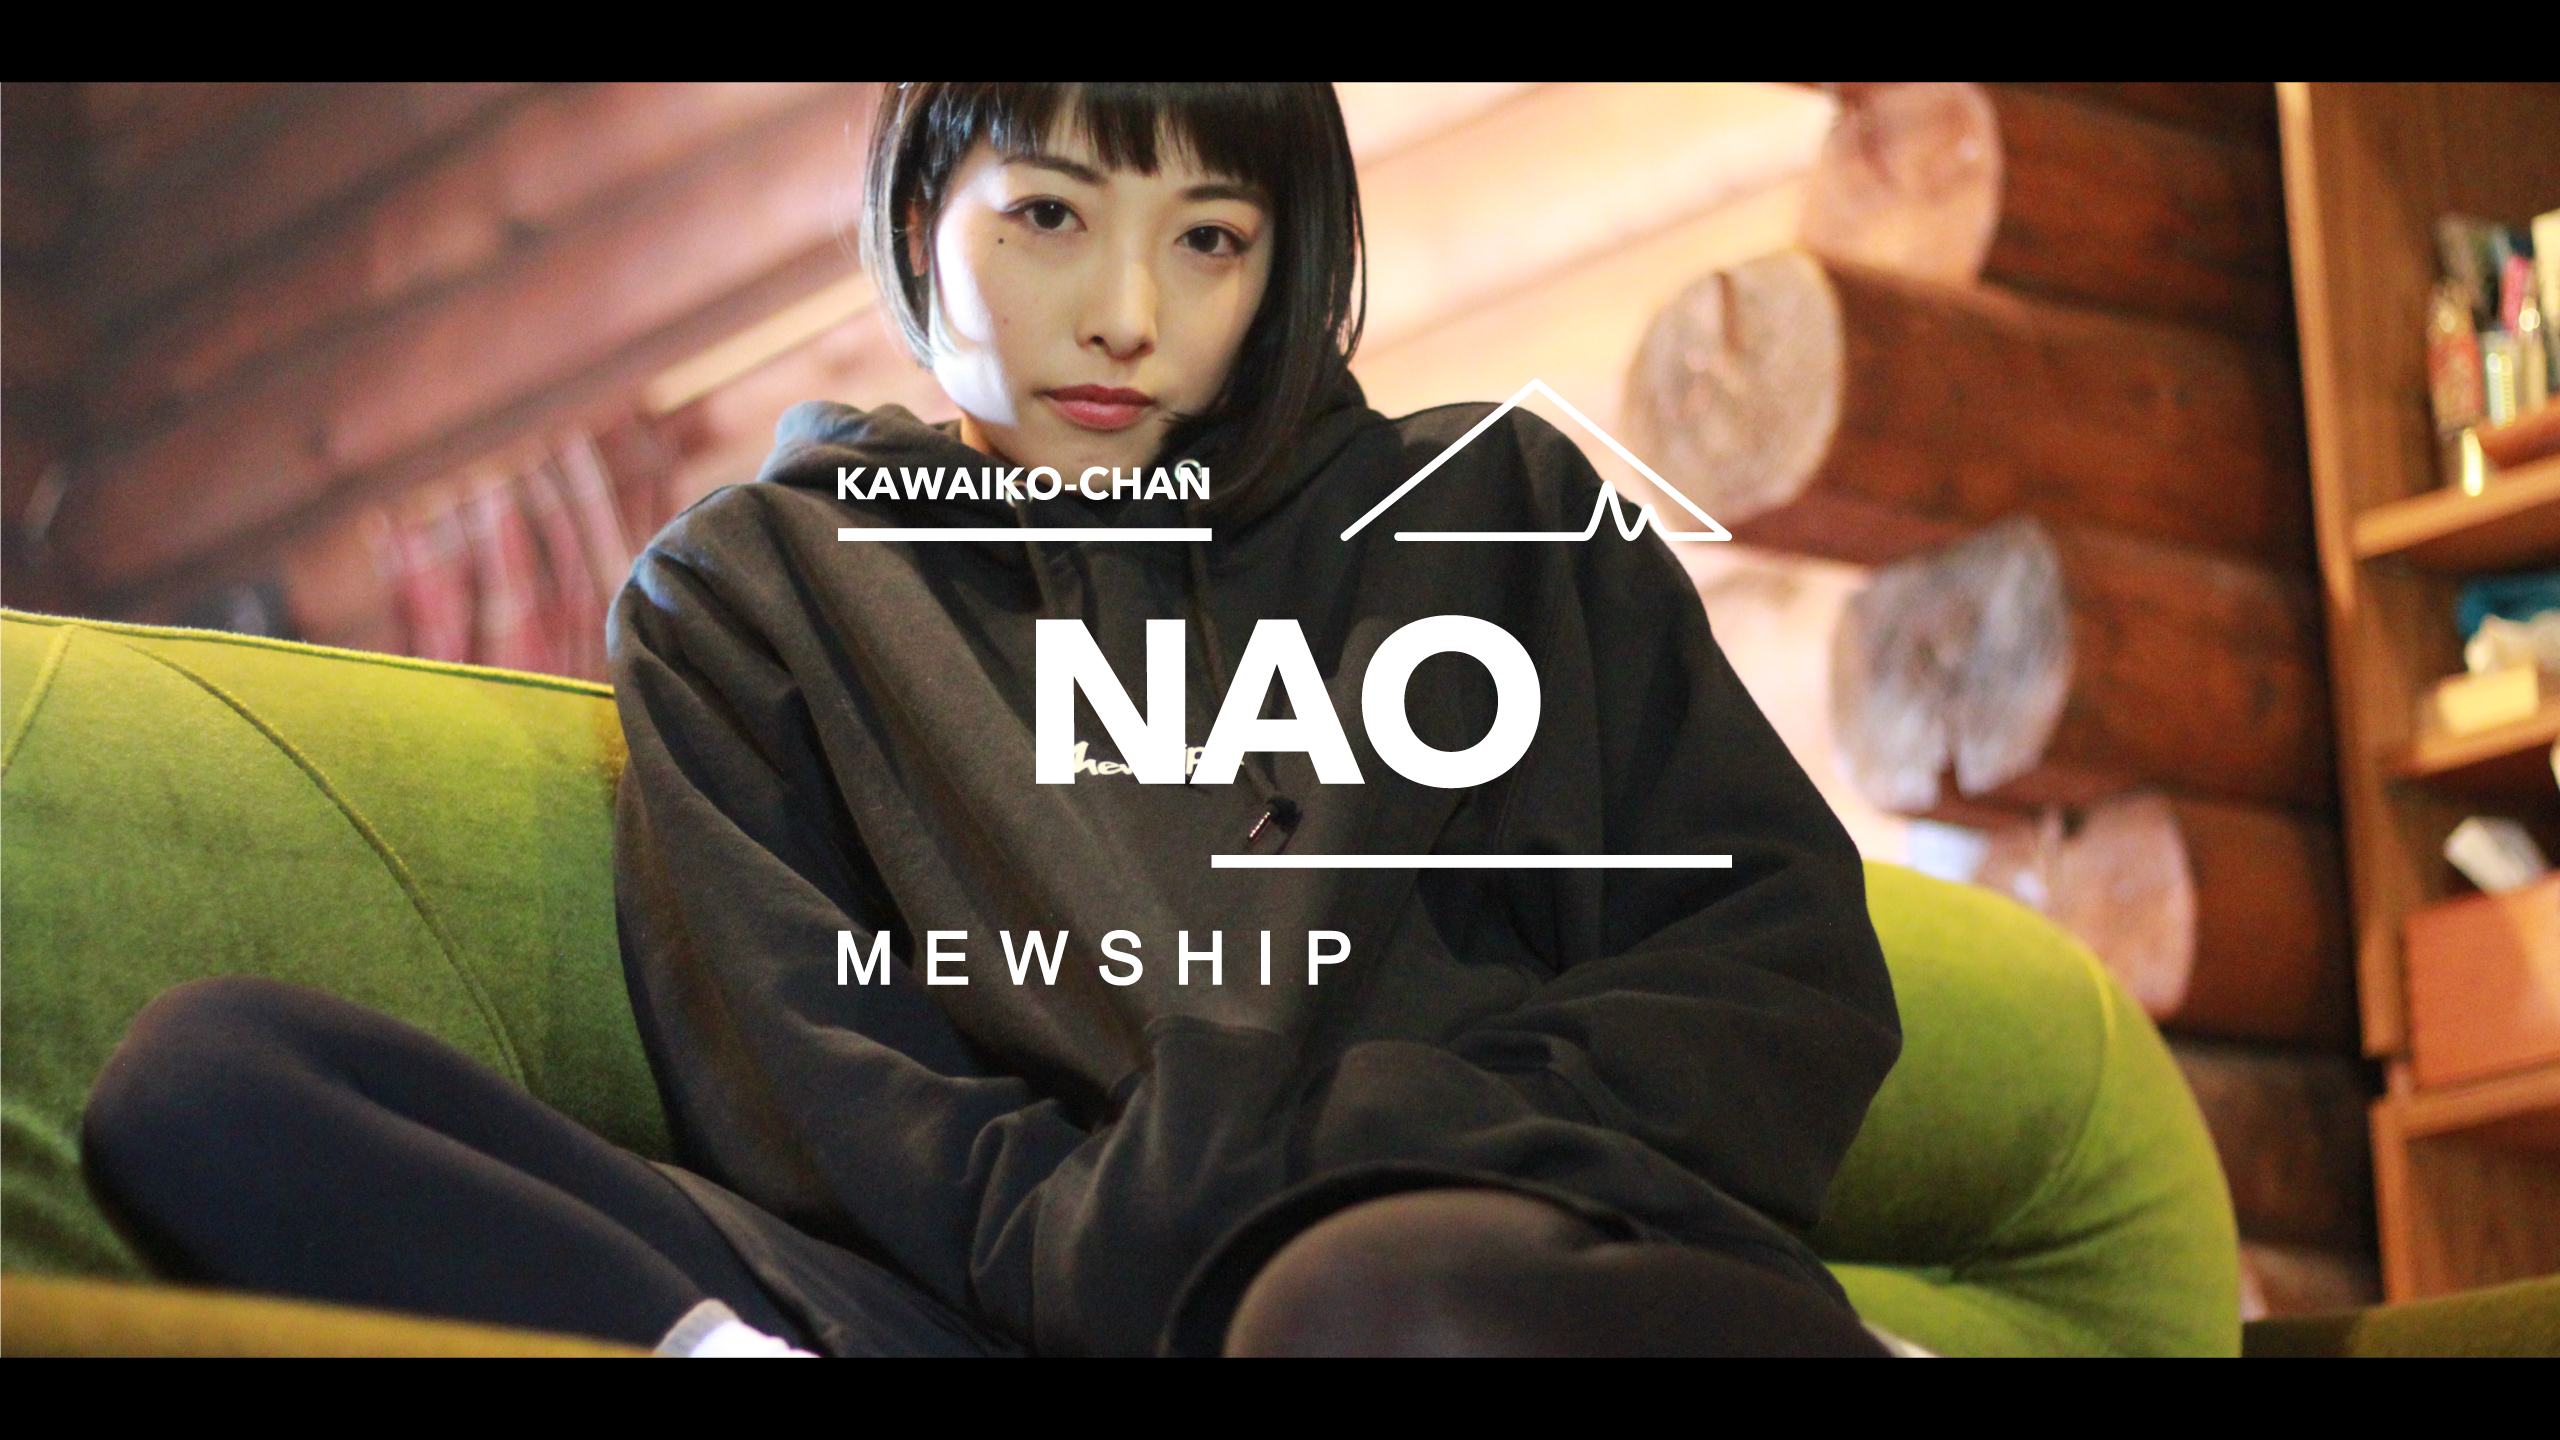 MEWSHIP "KAWAIKO-CHAN" NAO 2019.03.13 富山美女